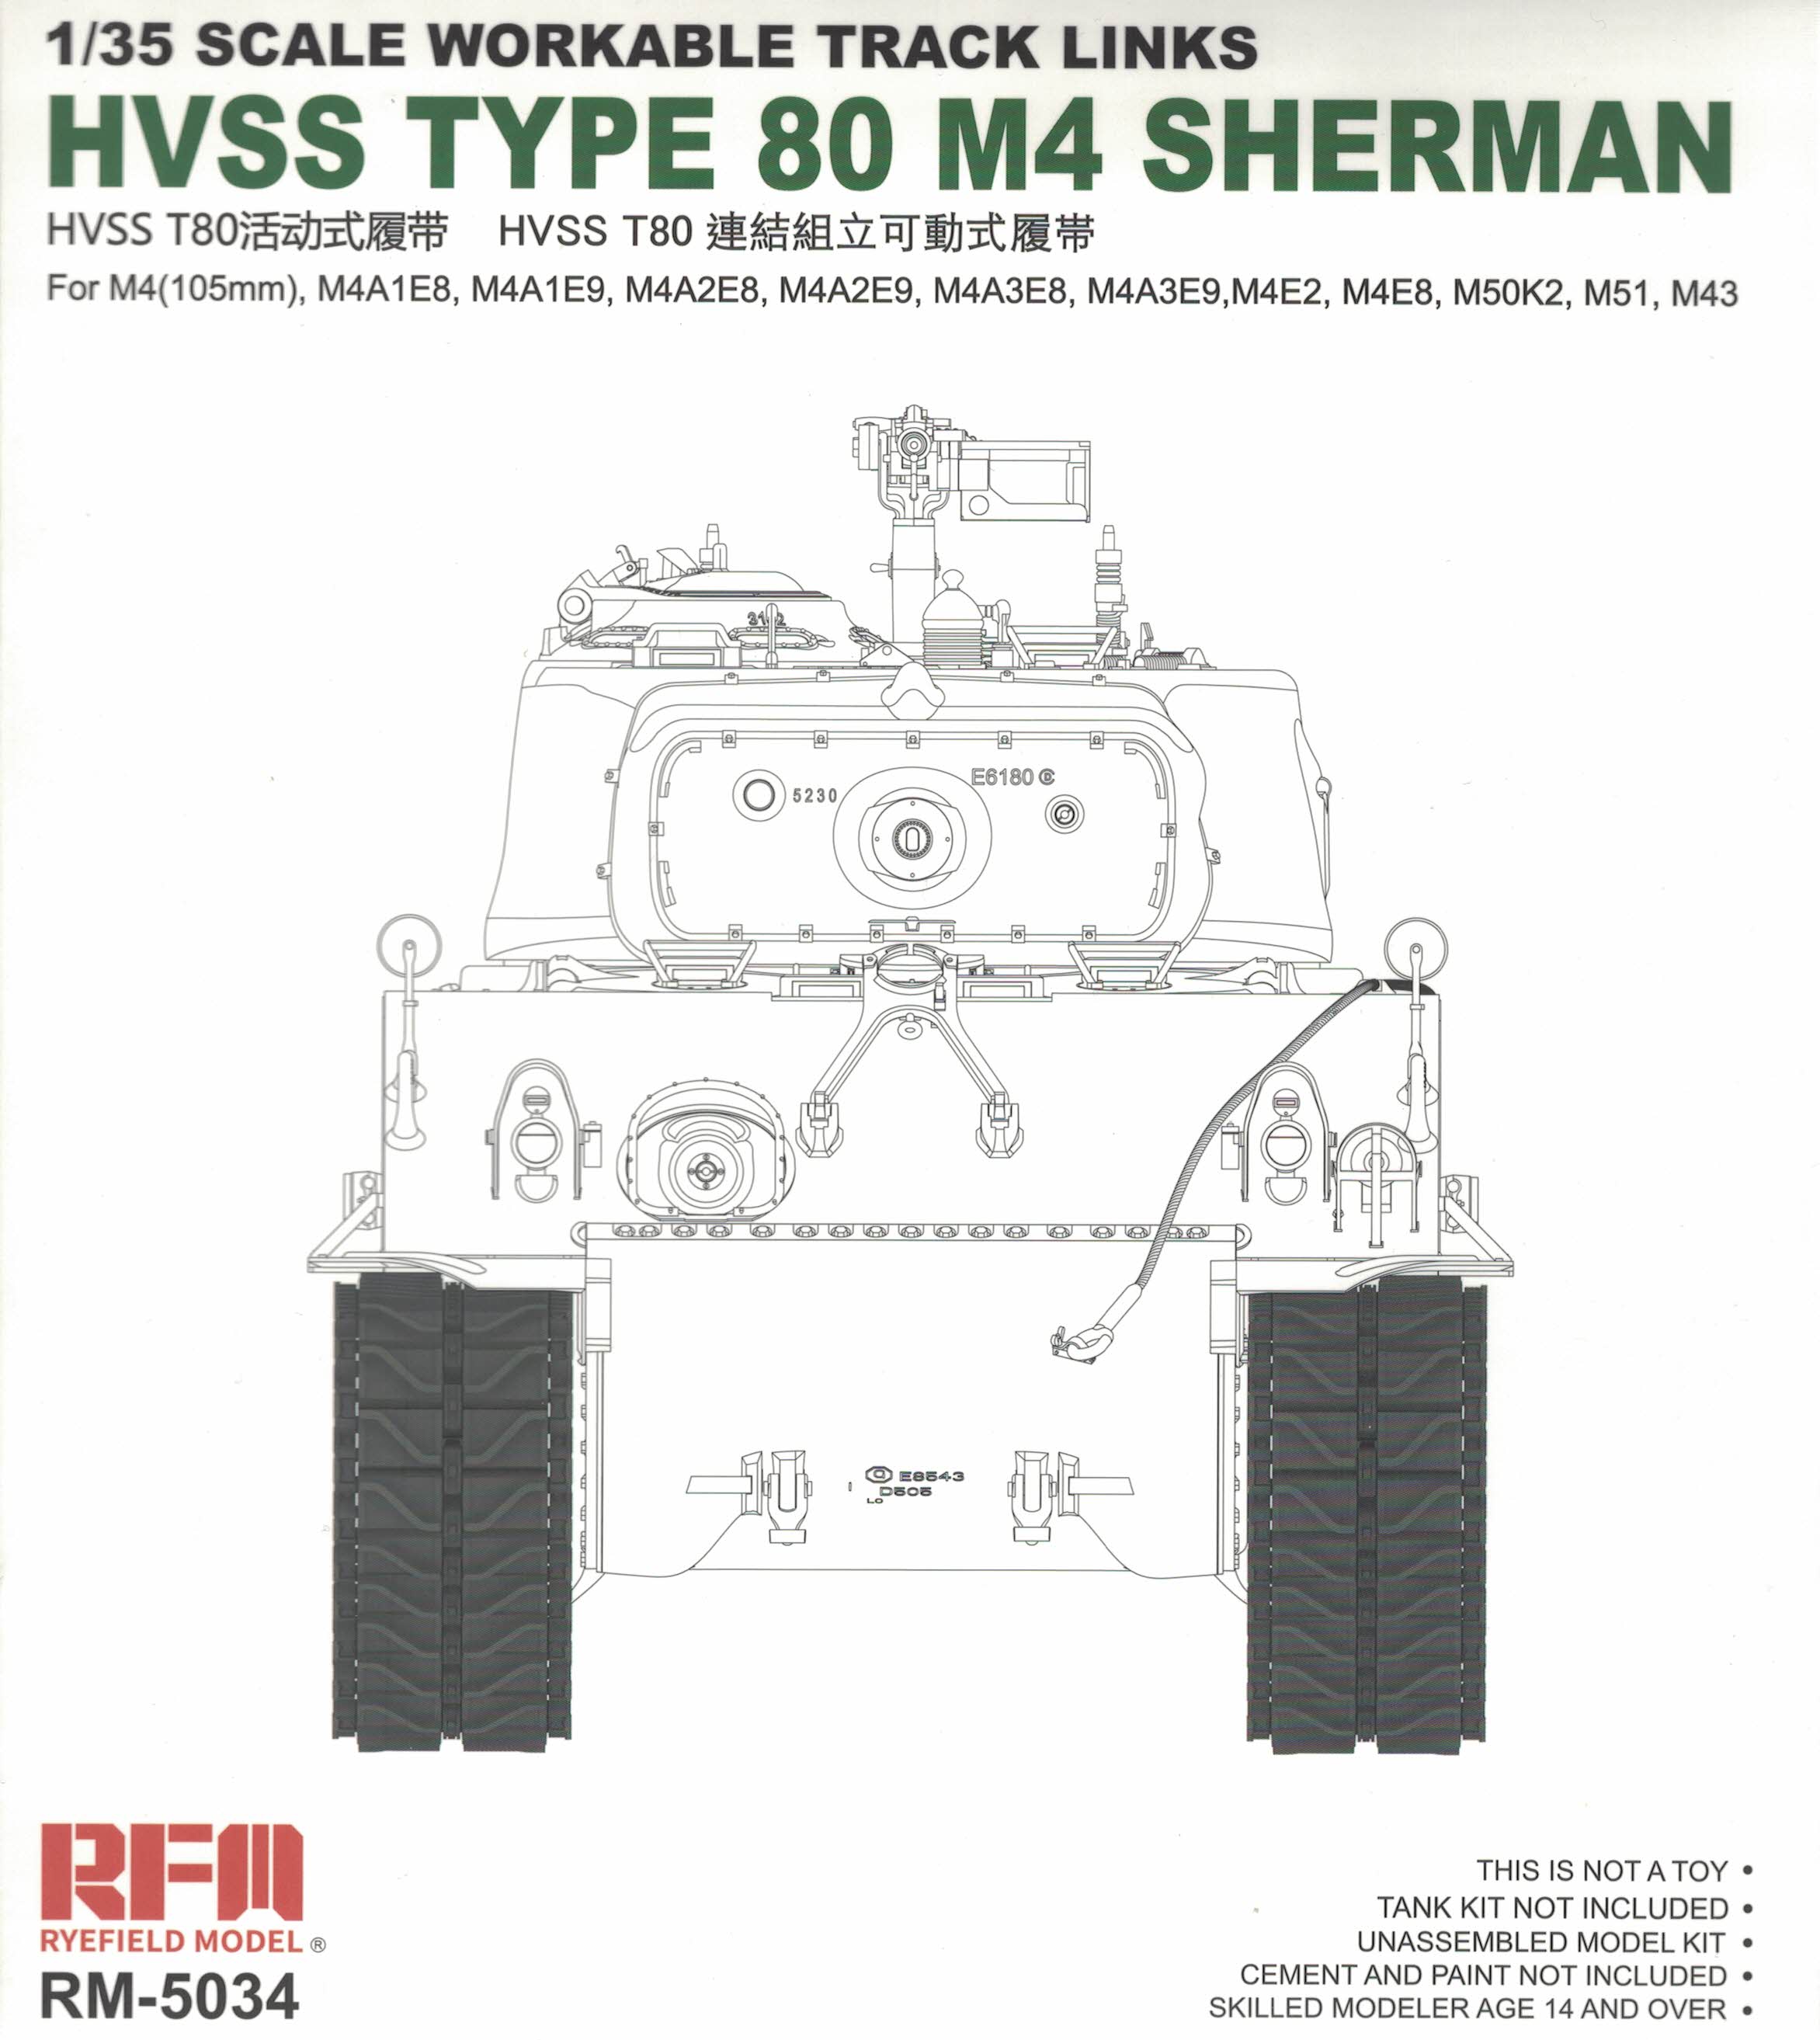 RM-5034  траки наборные   M4 Sherman HVSS 80 track  (1:35)